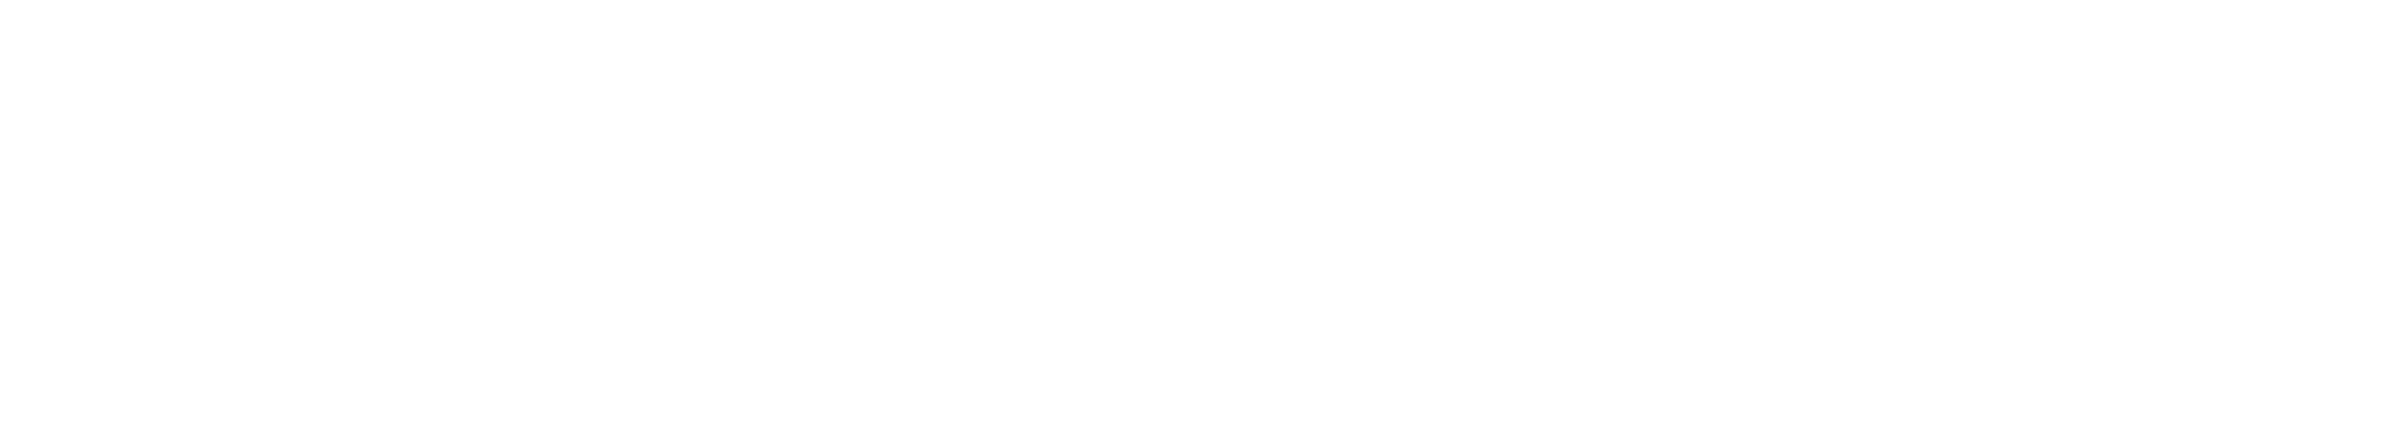 windows logo PNG ดาวน์โหลดฟรี